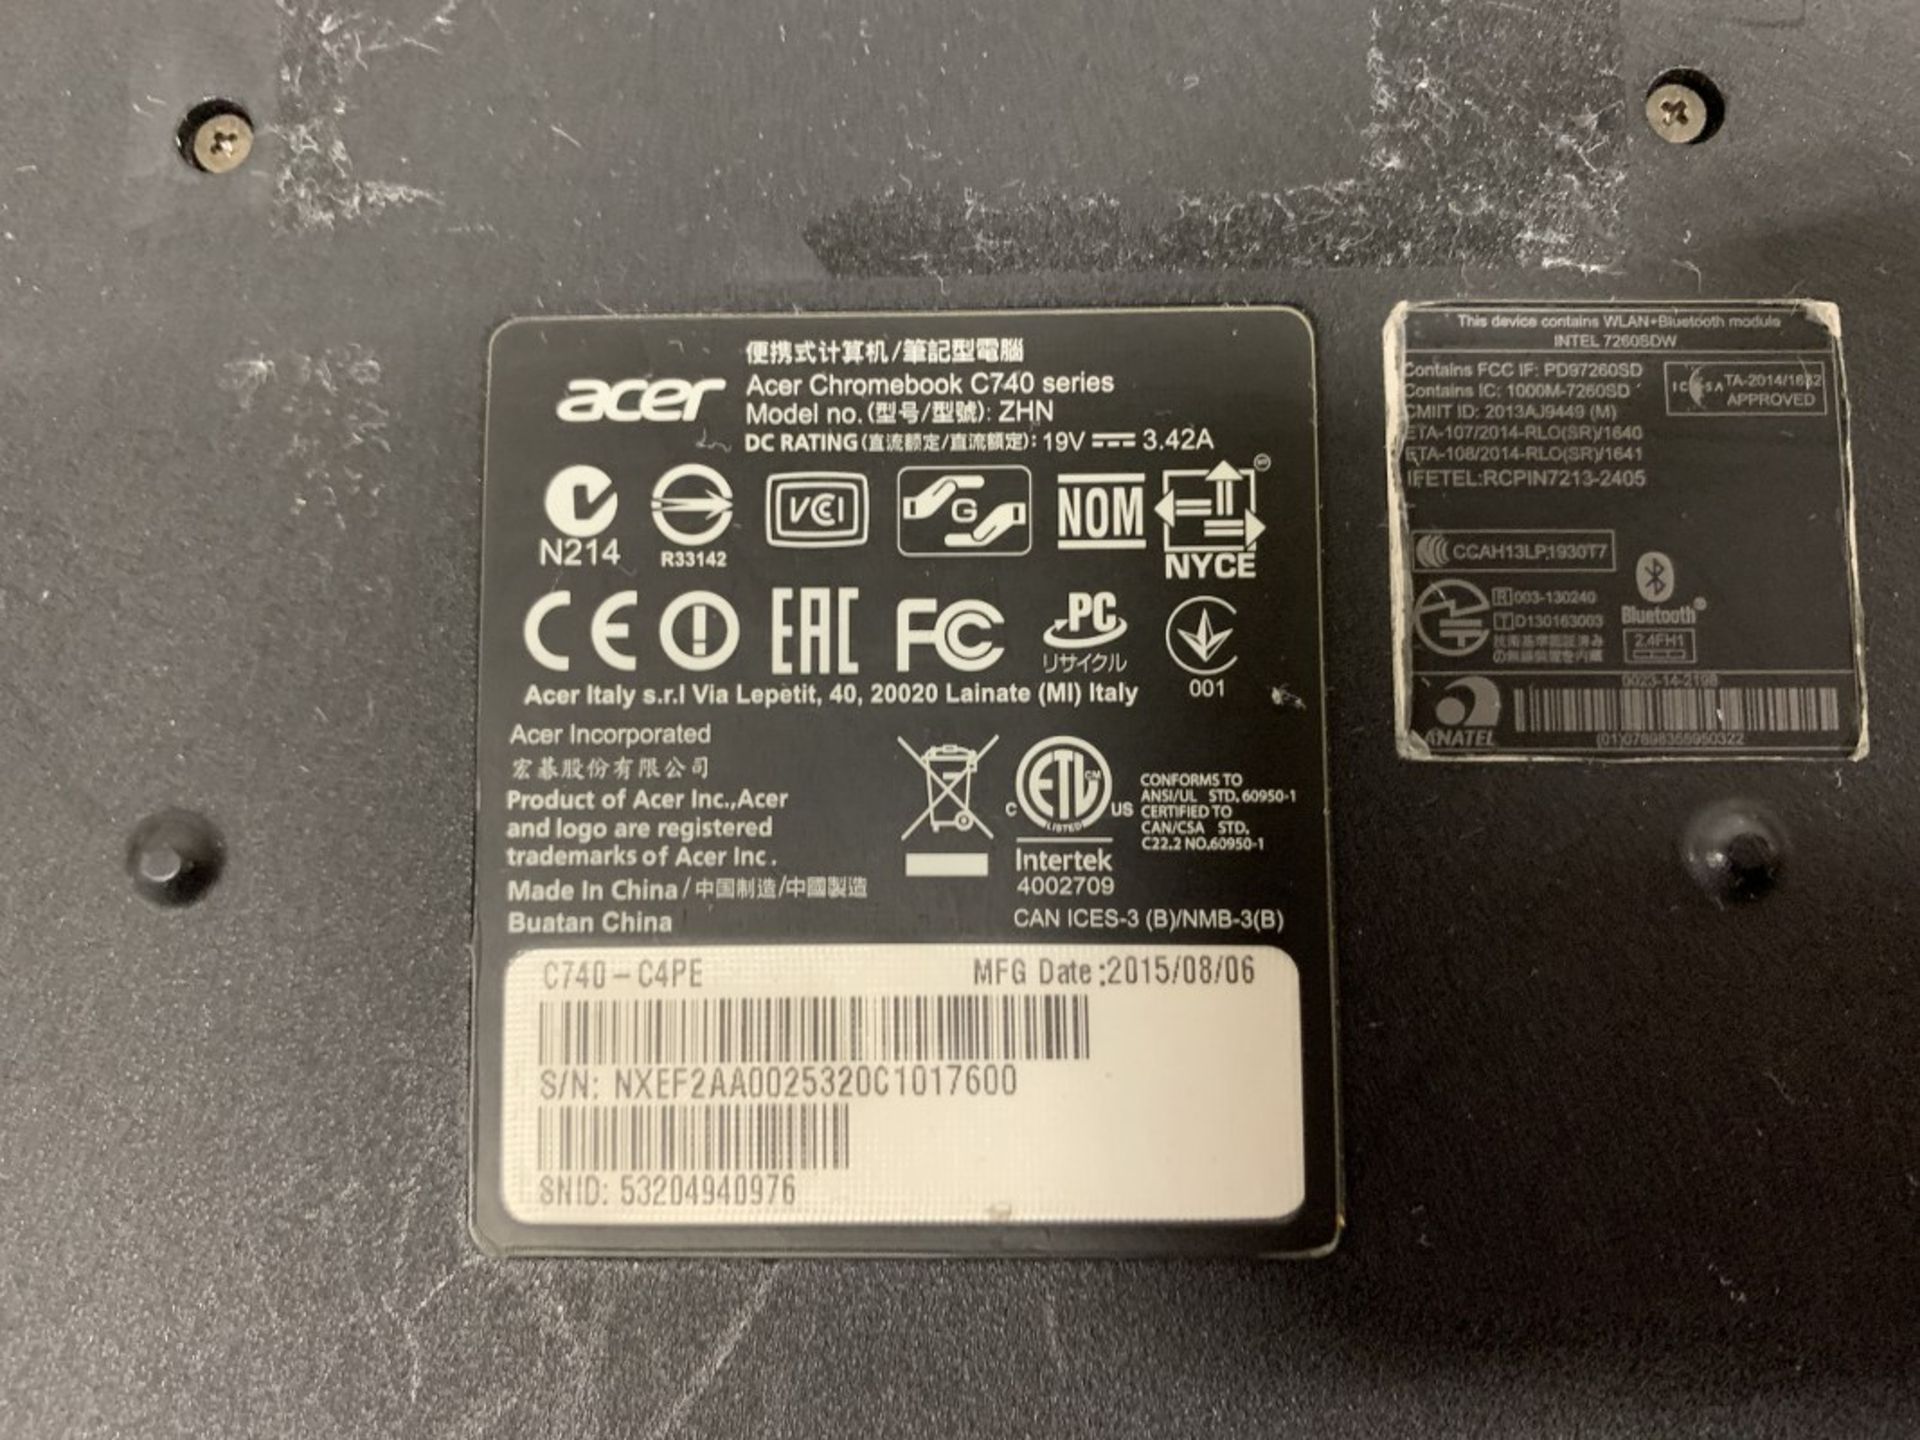 Acer - Chromebook 11 C740-C4PE (11.6-inch HD, 4 GB, 16GB SSD) - Image 2 of 3